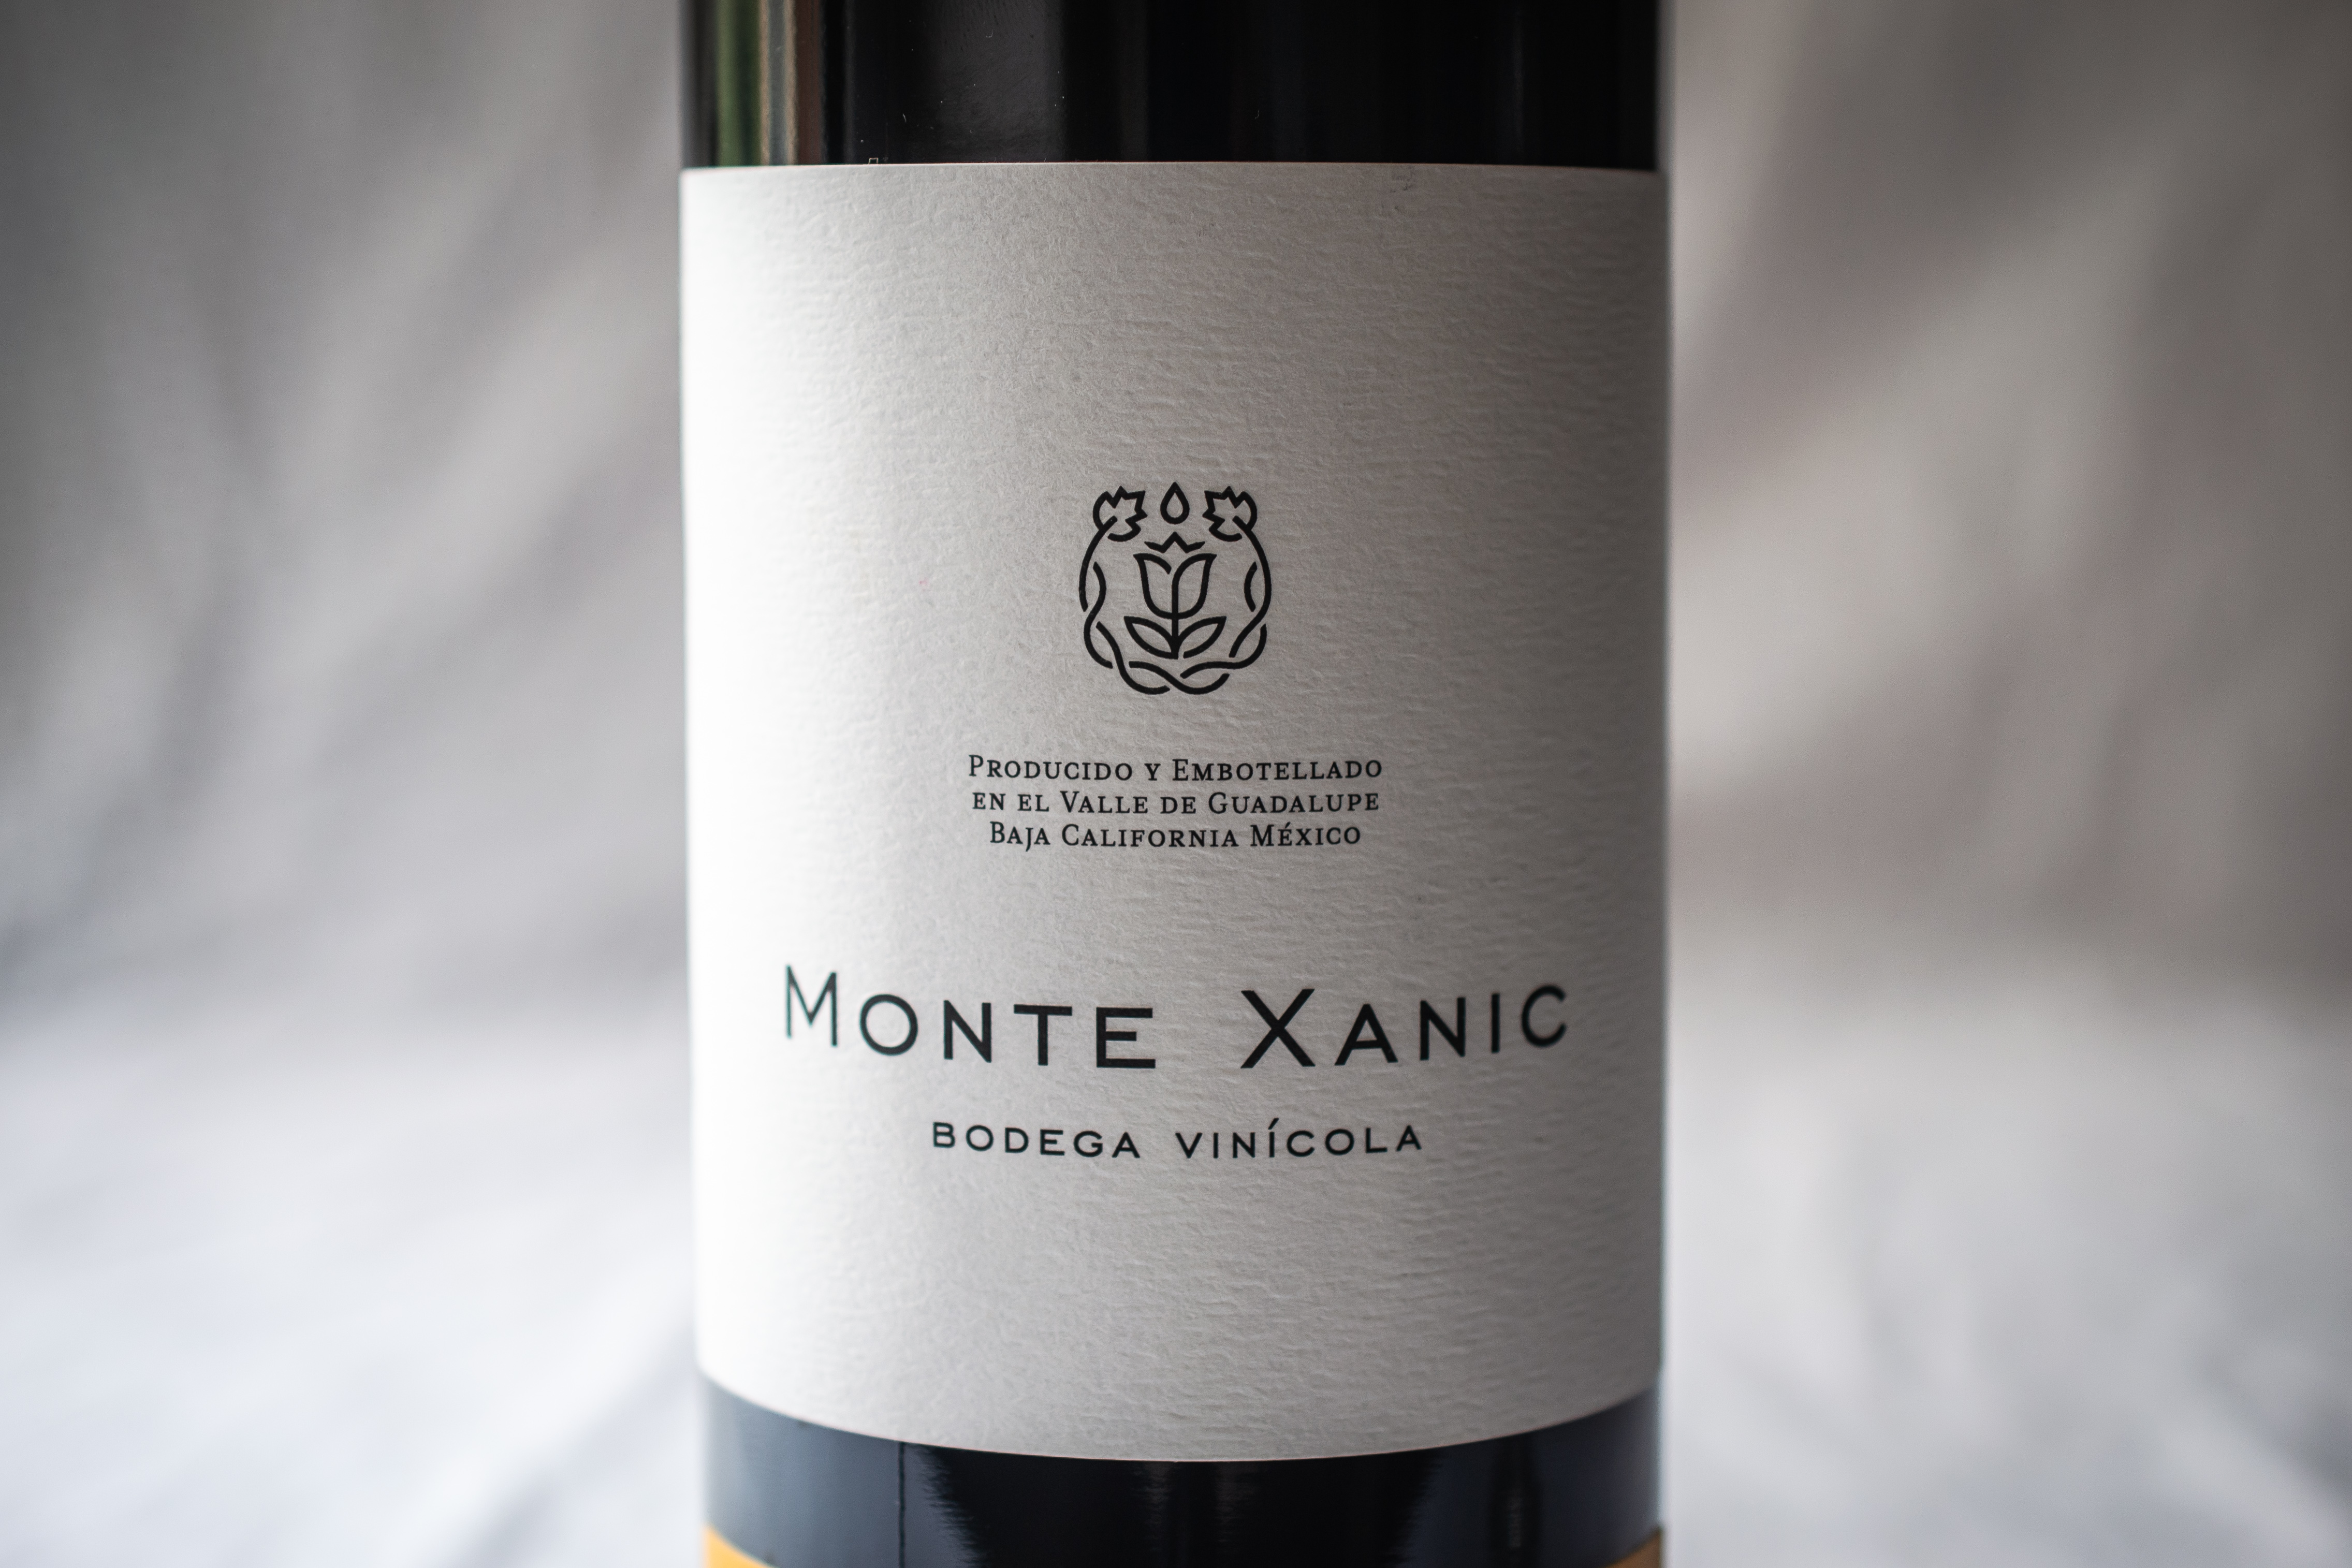 Monte Xanic Cabernet Sauvignon Merlot wine bottle label